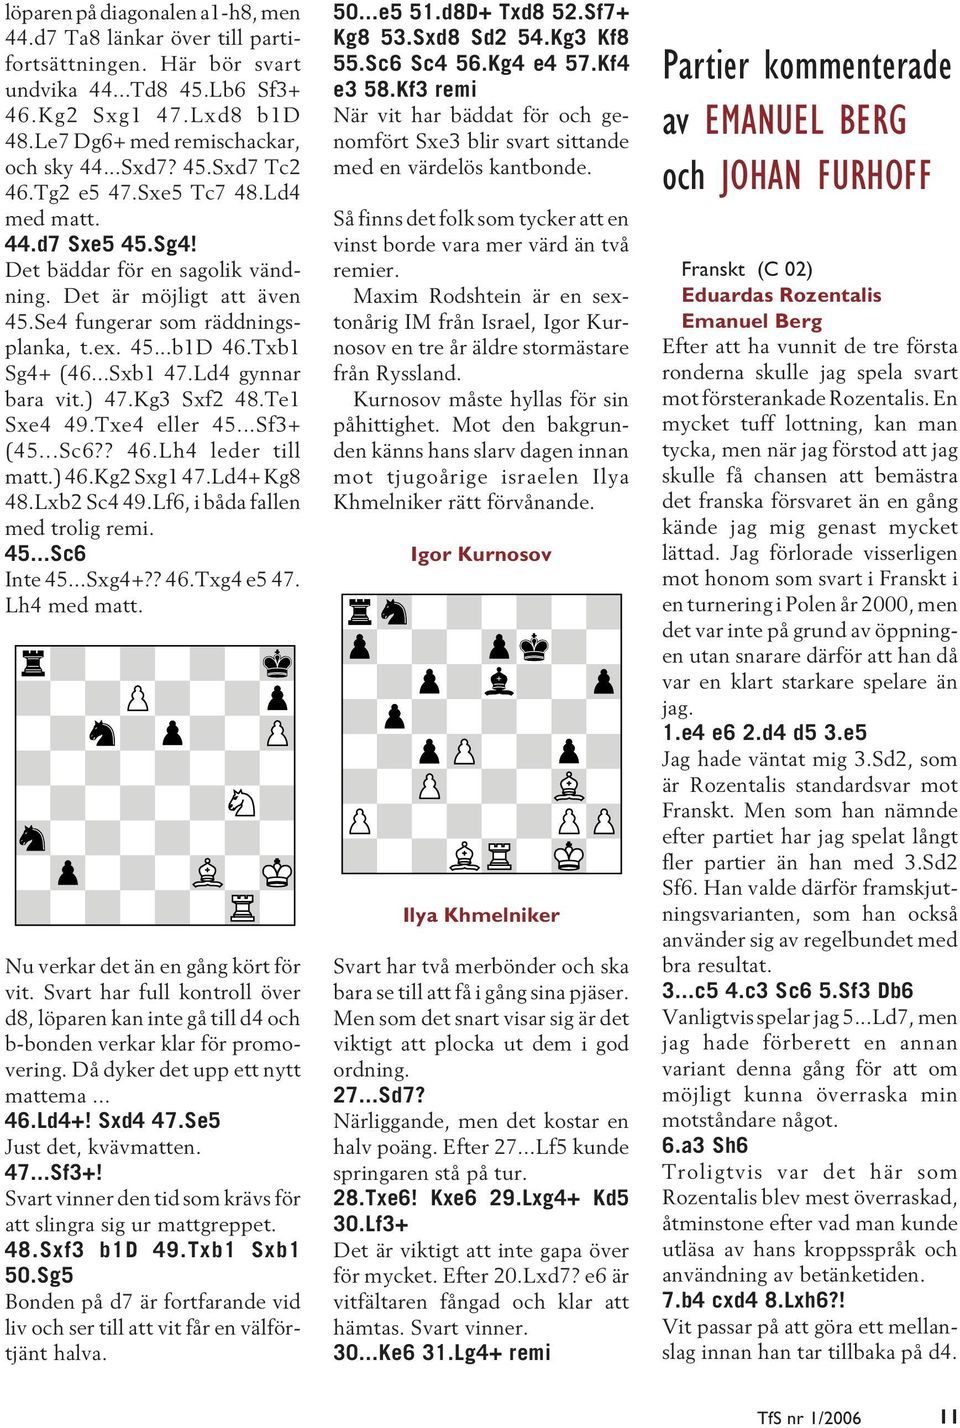 Ld4 gynnar bara vit.) 47.Kg3 Sxf2 48.Te1 Sxe4 49.Txe4 eller 45...Sf3+ (45...Sc6?? 46.Lh4 leder till matt.) 46.Kg2 Sxg1 47.Ld4+ Kg8 48.Lxb2 Sc4 49.Lf6, i båda fallen med trolig remi. 45...Sc6 Inte 45.